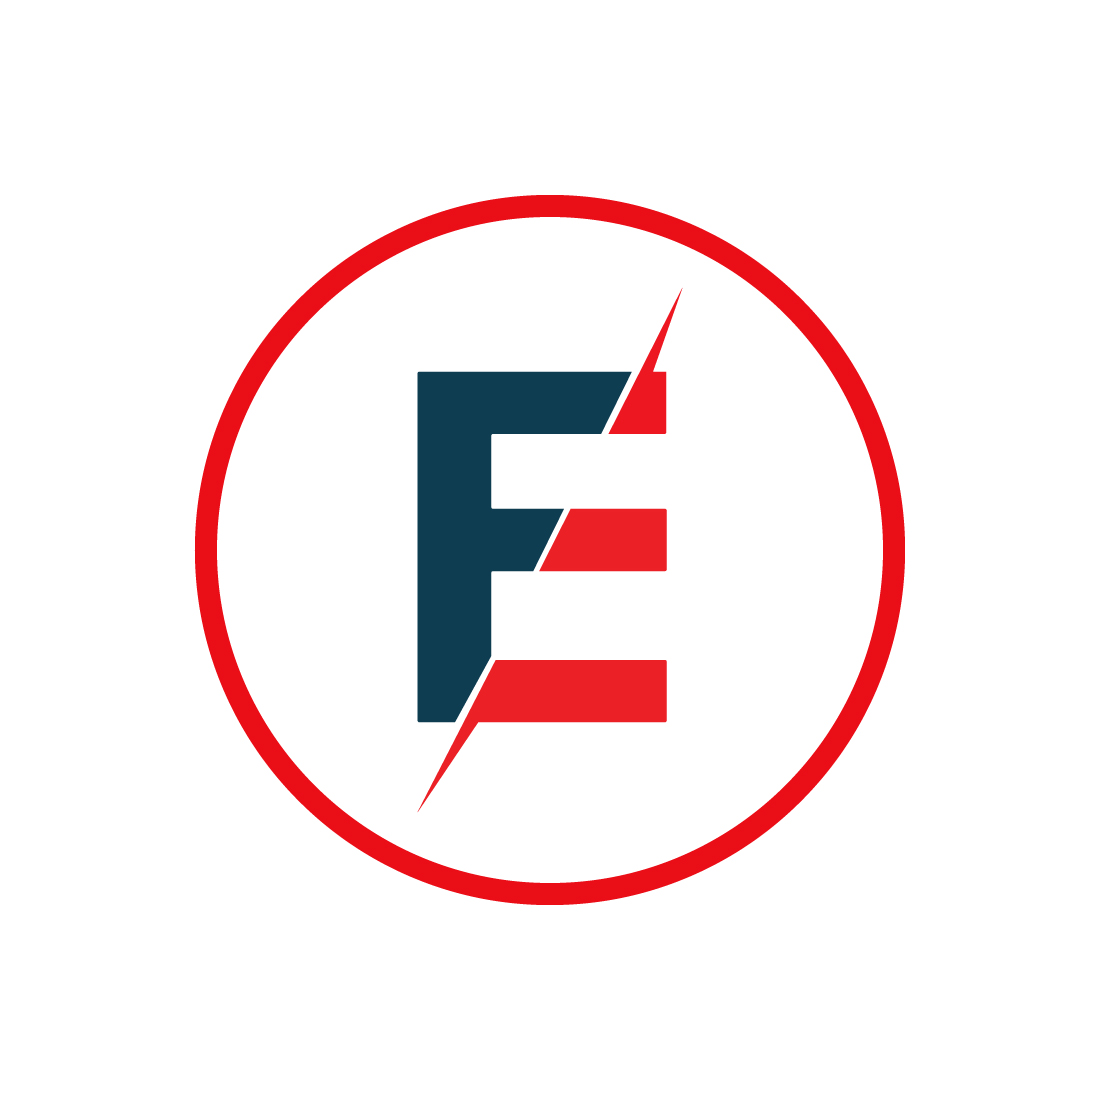 Initials E letters logo design vector icon E circle logo design preview image.